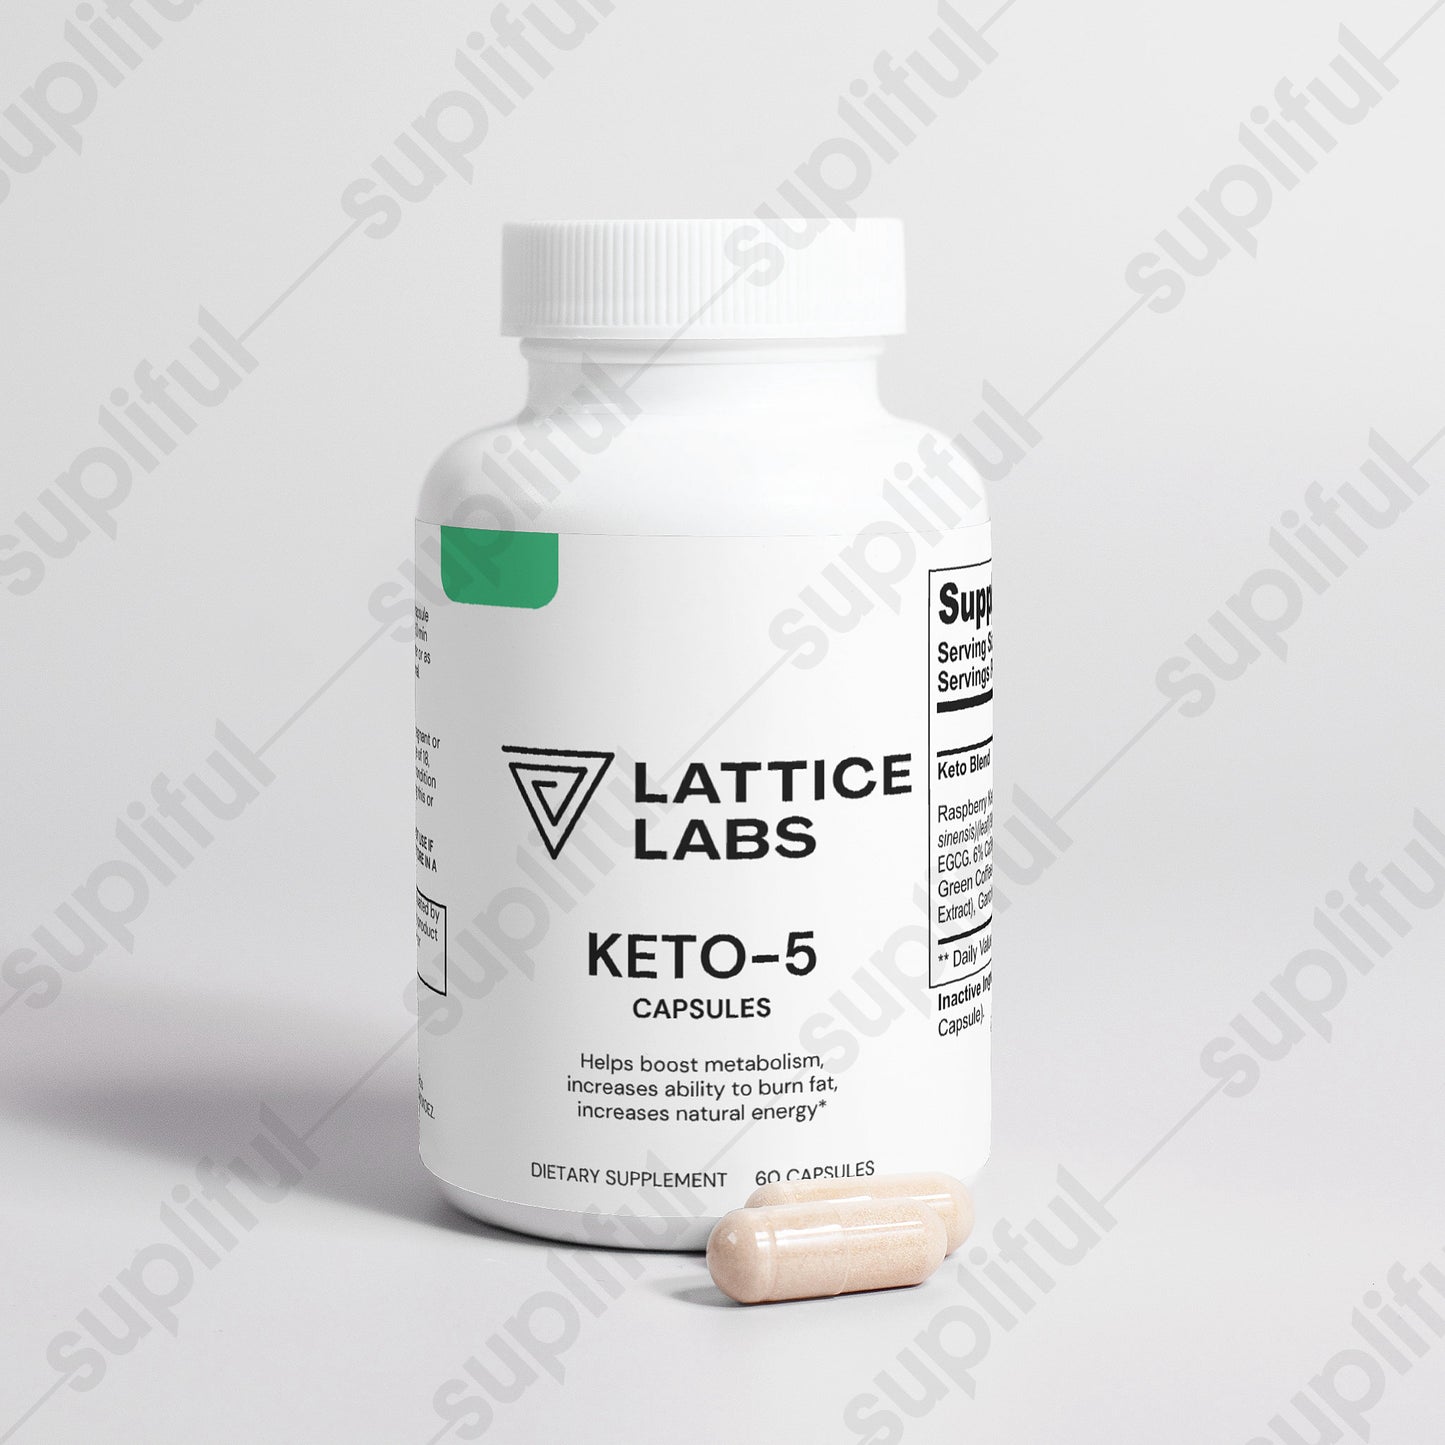 Lattice Labs Keto-5